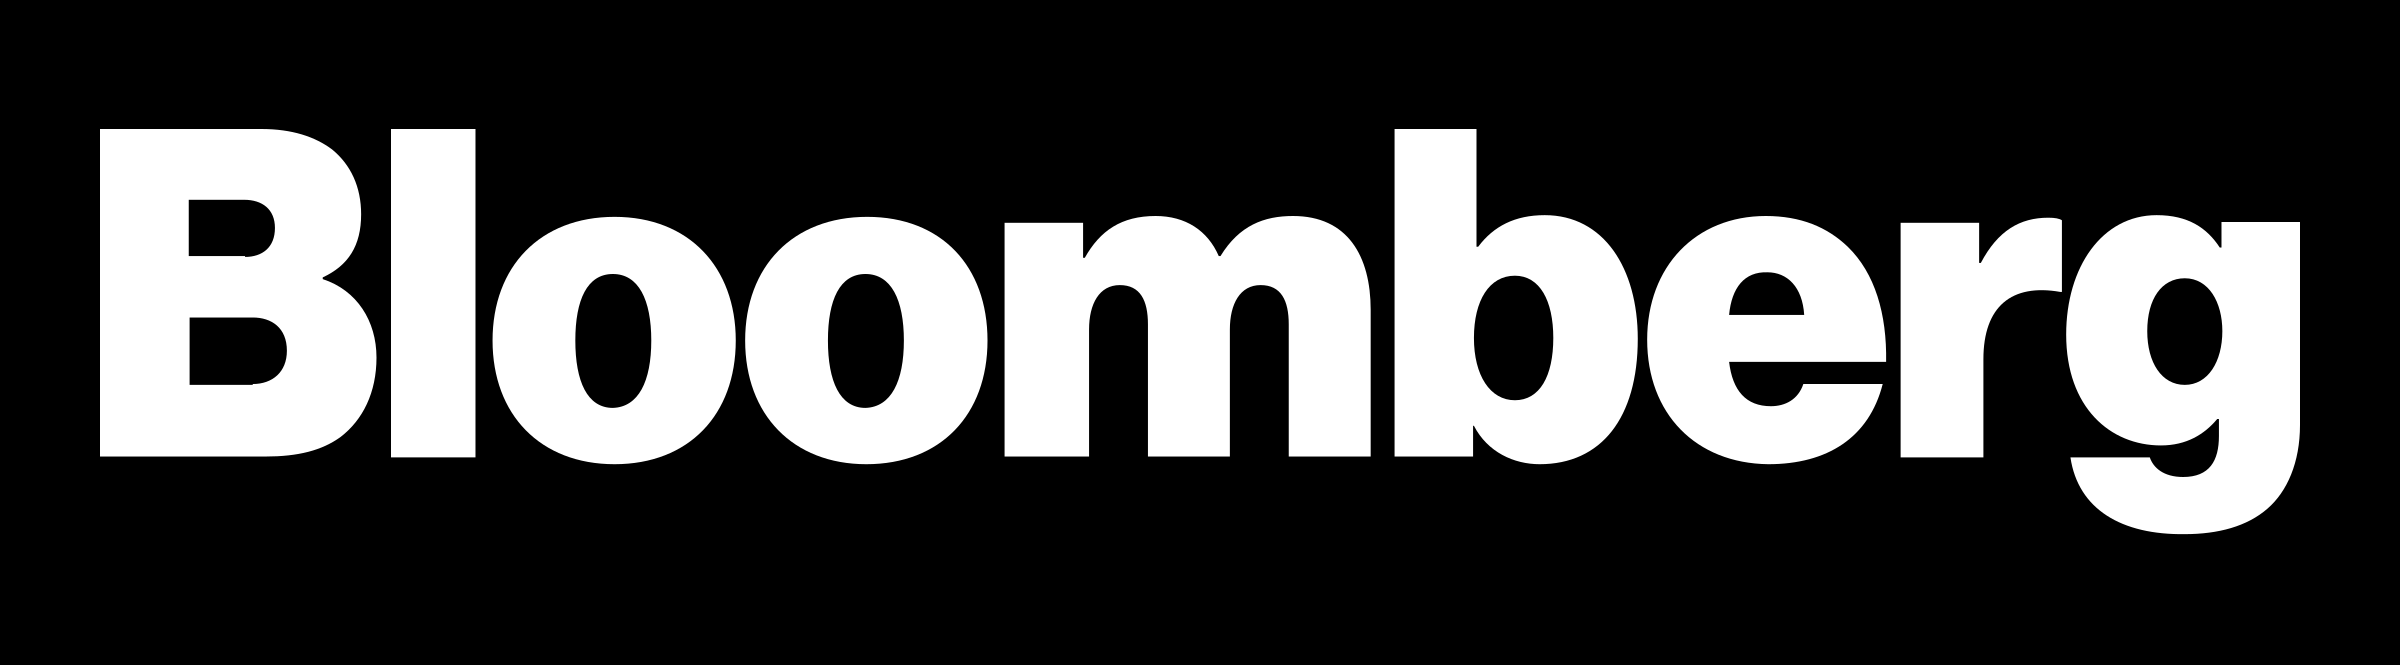 Download Bloomberg-logo - Blo